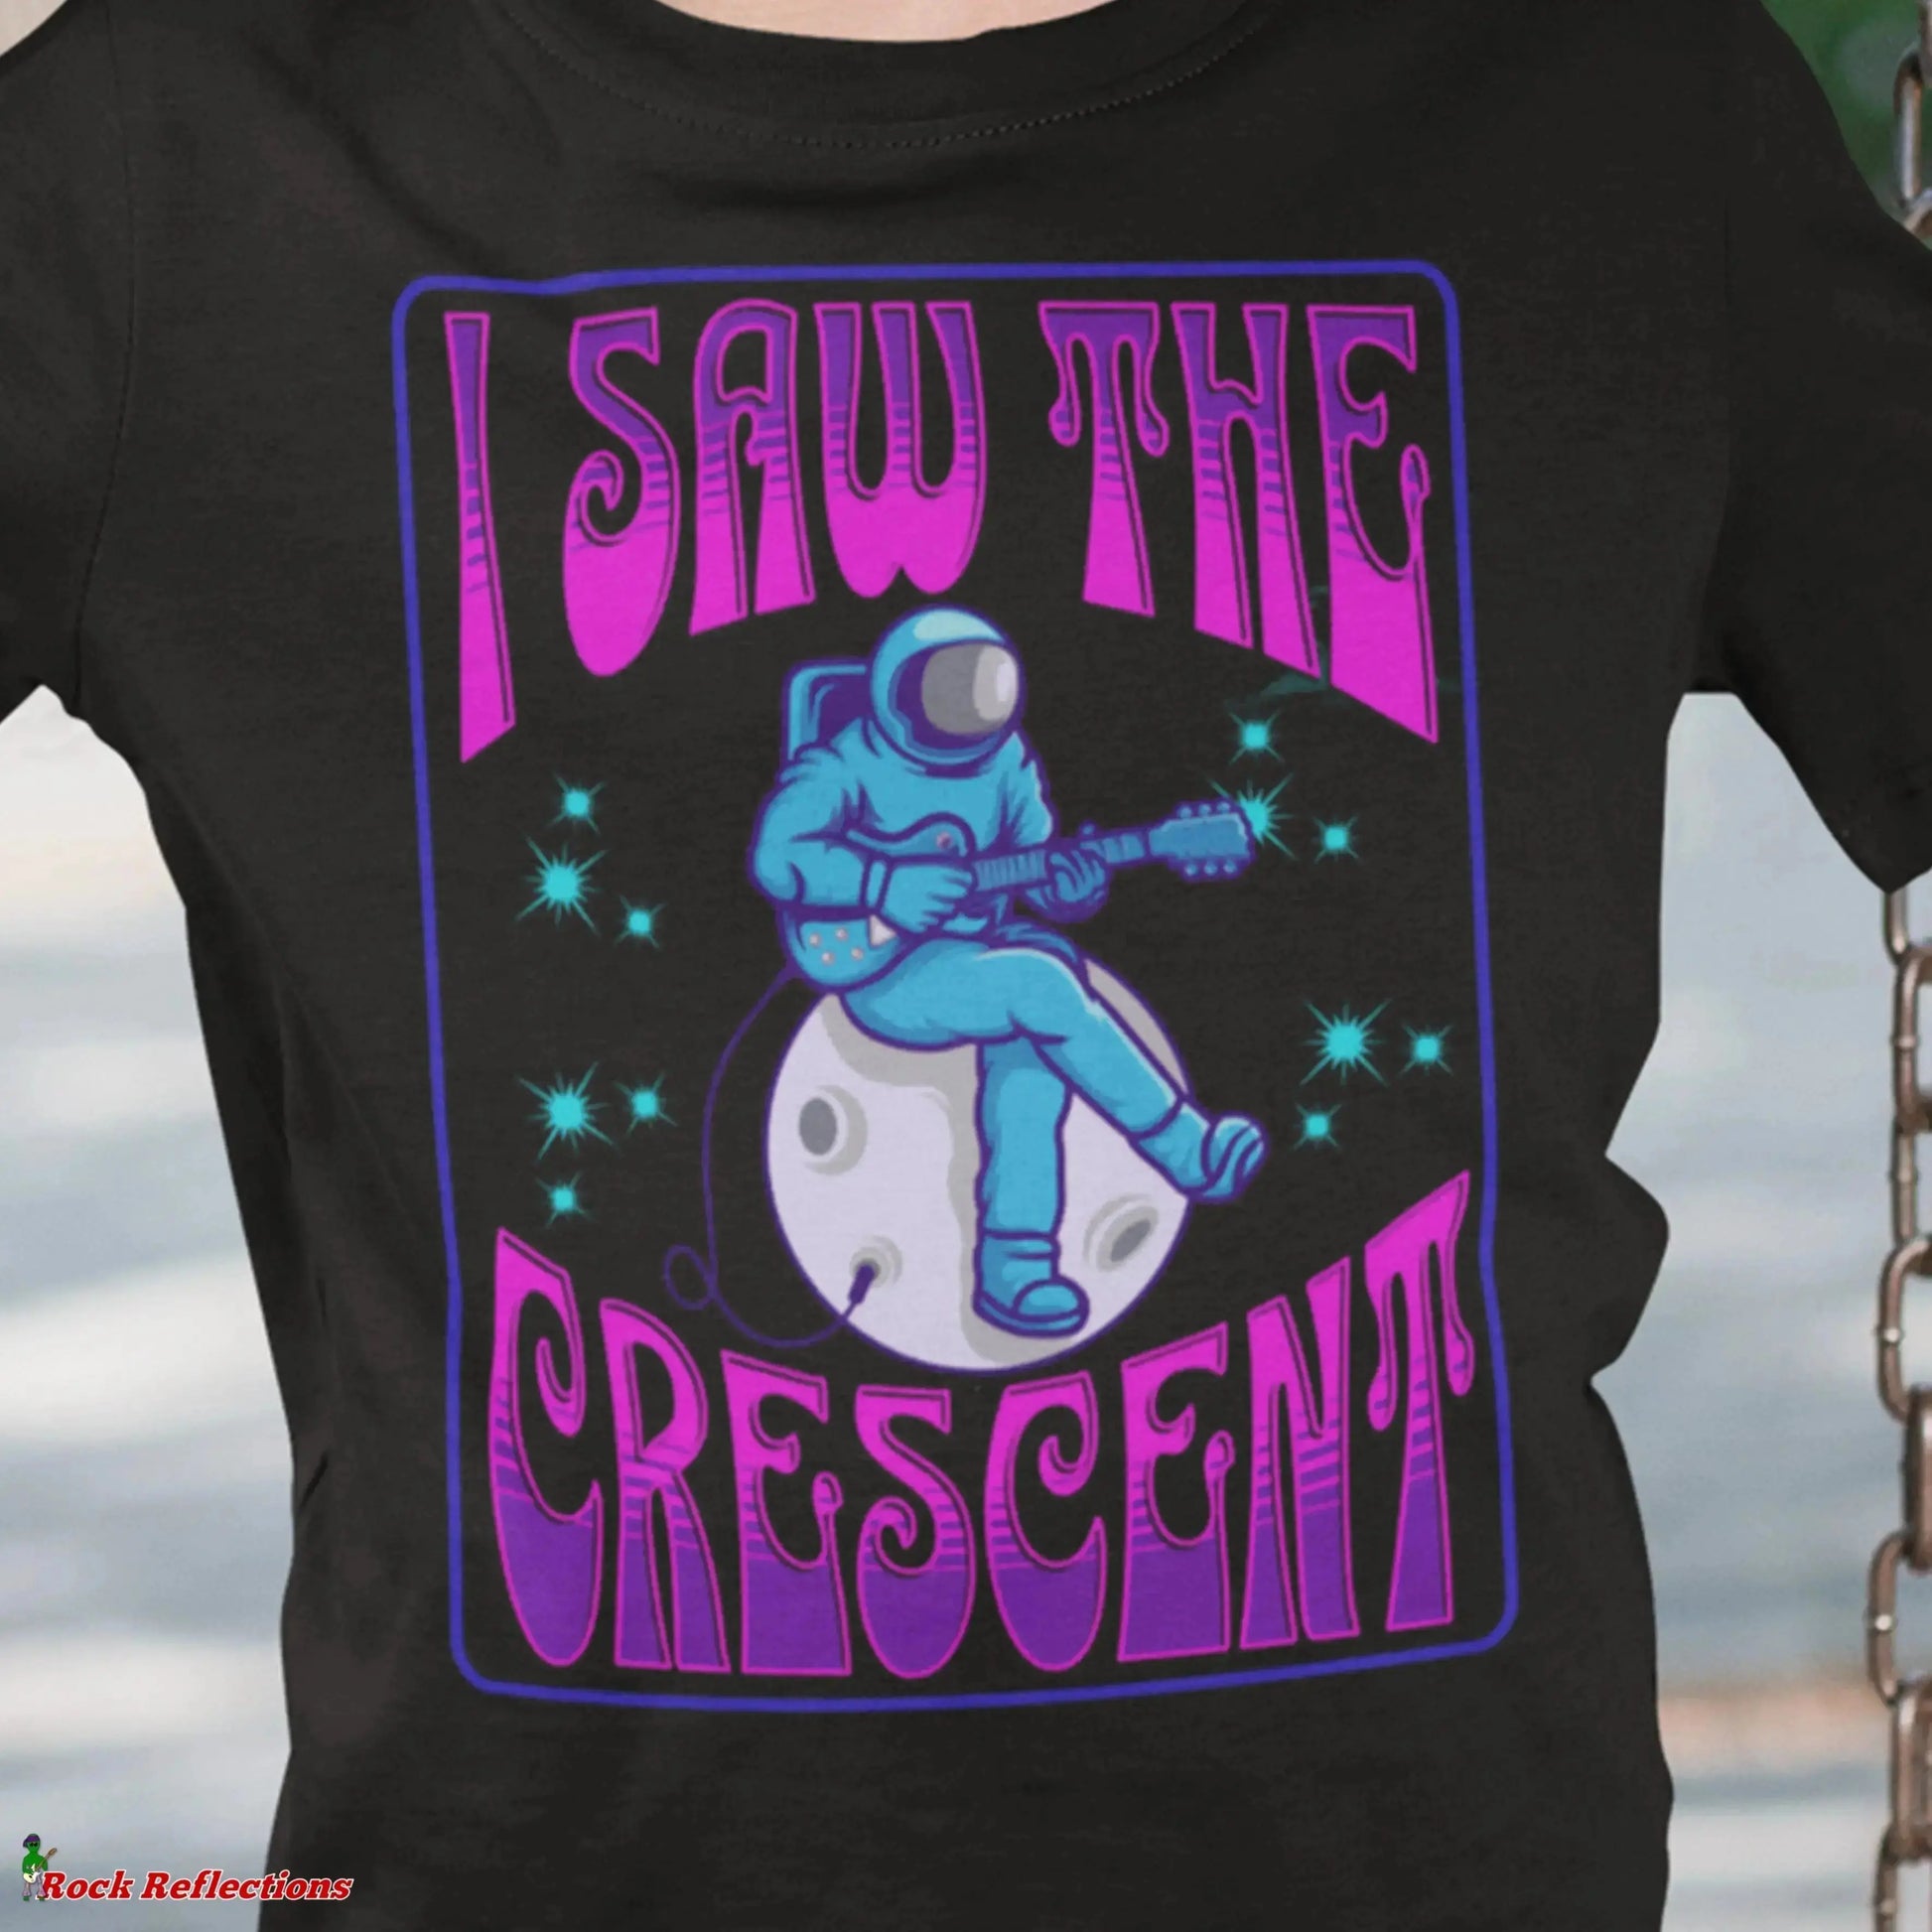 I Saw The Crescent T-Shirt SPOD